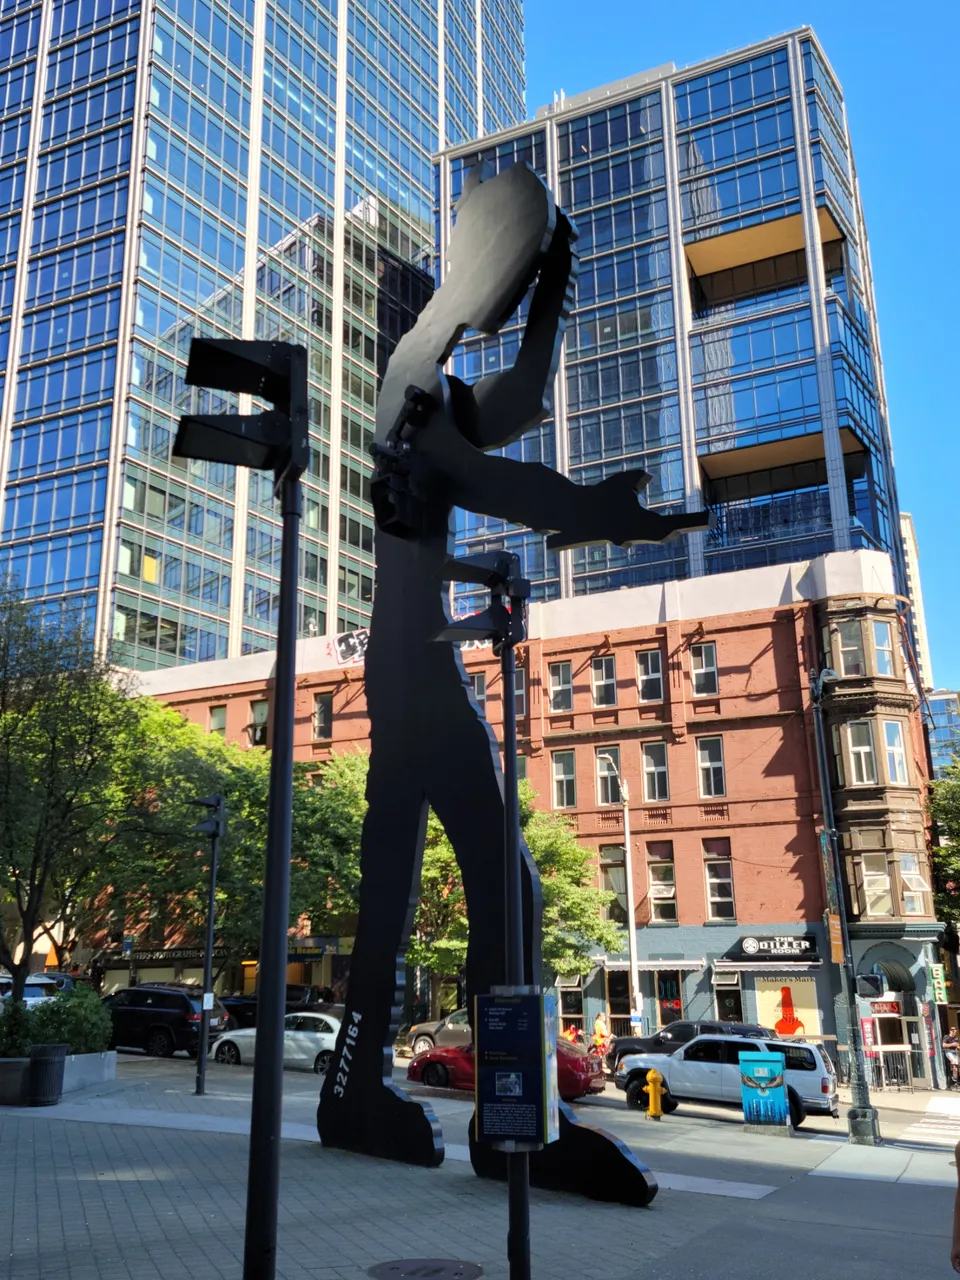 Hammering Man sculpture outside the Seattle Art Museum